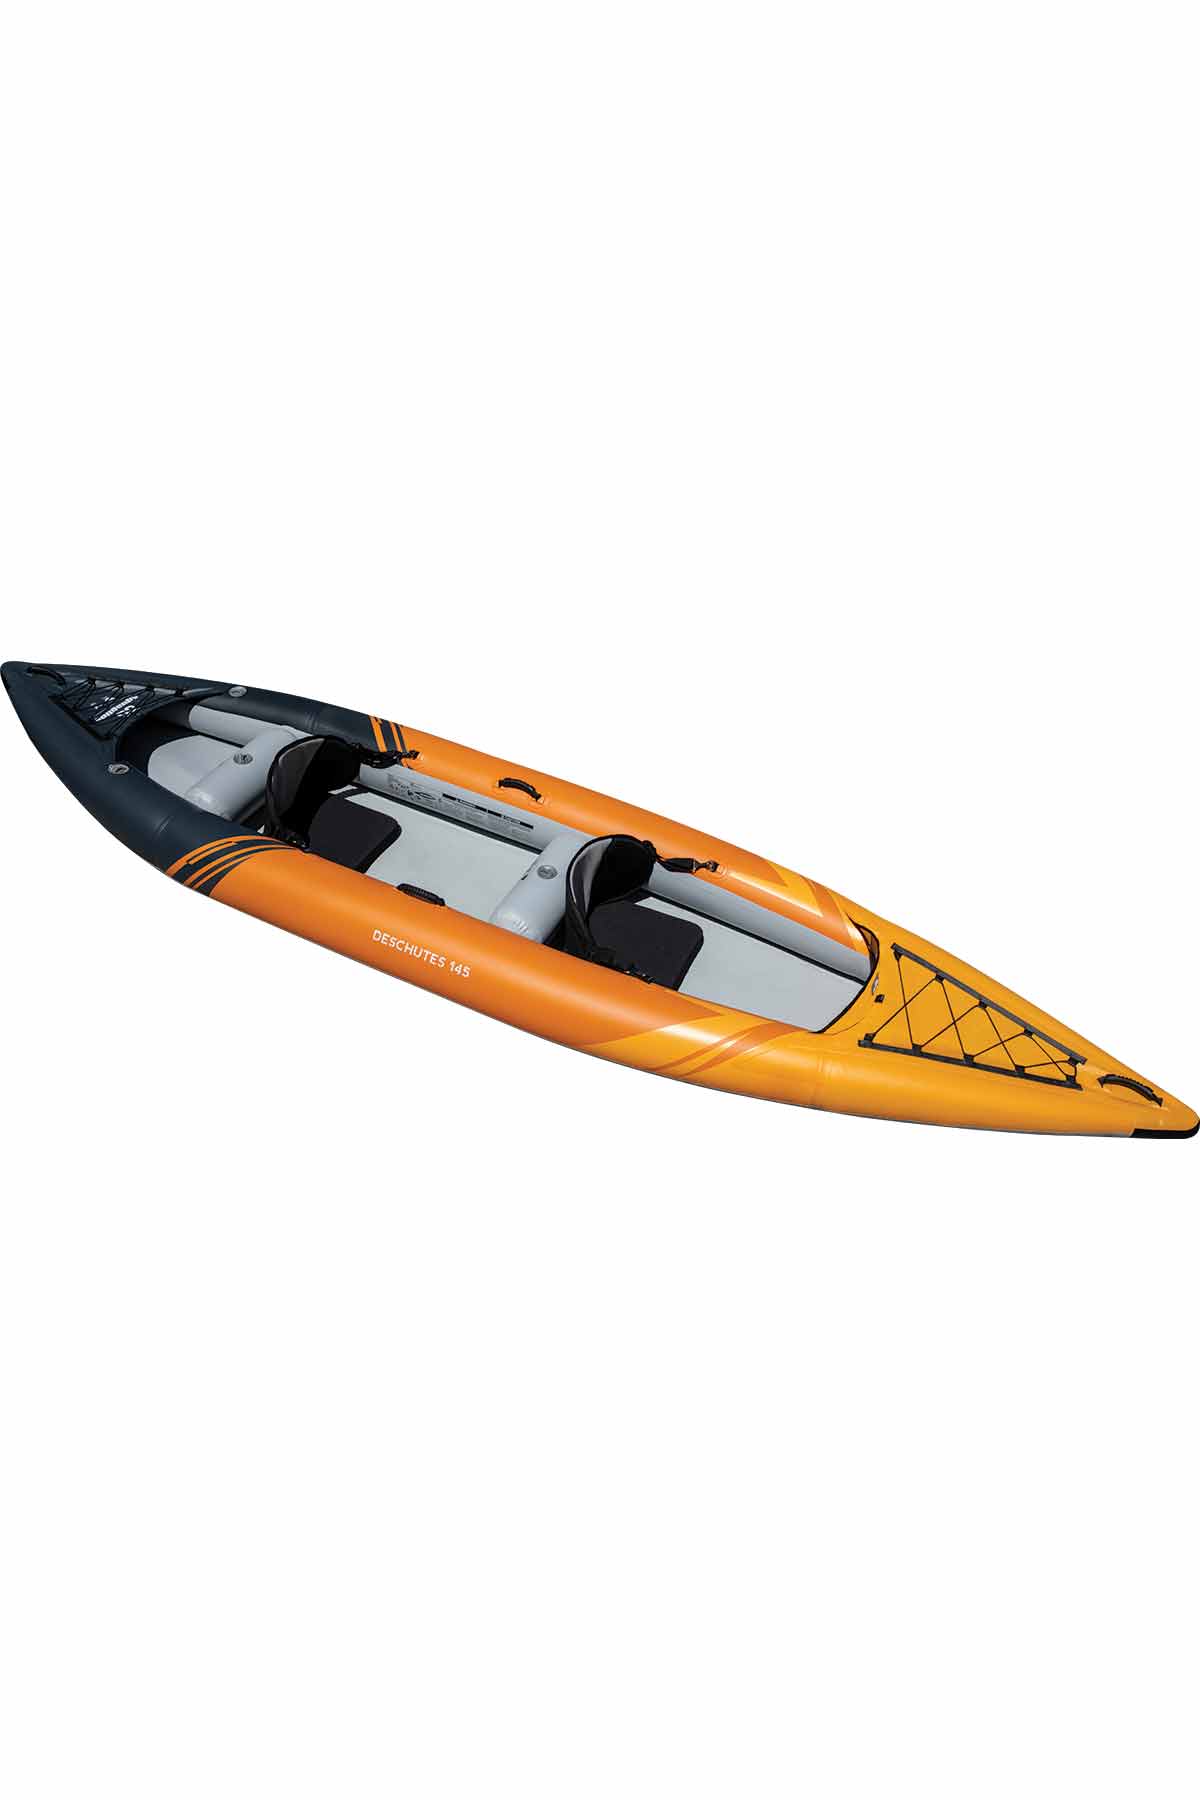 Aquaglide Deschutes 145 Inflatable Kayak Full View